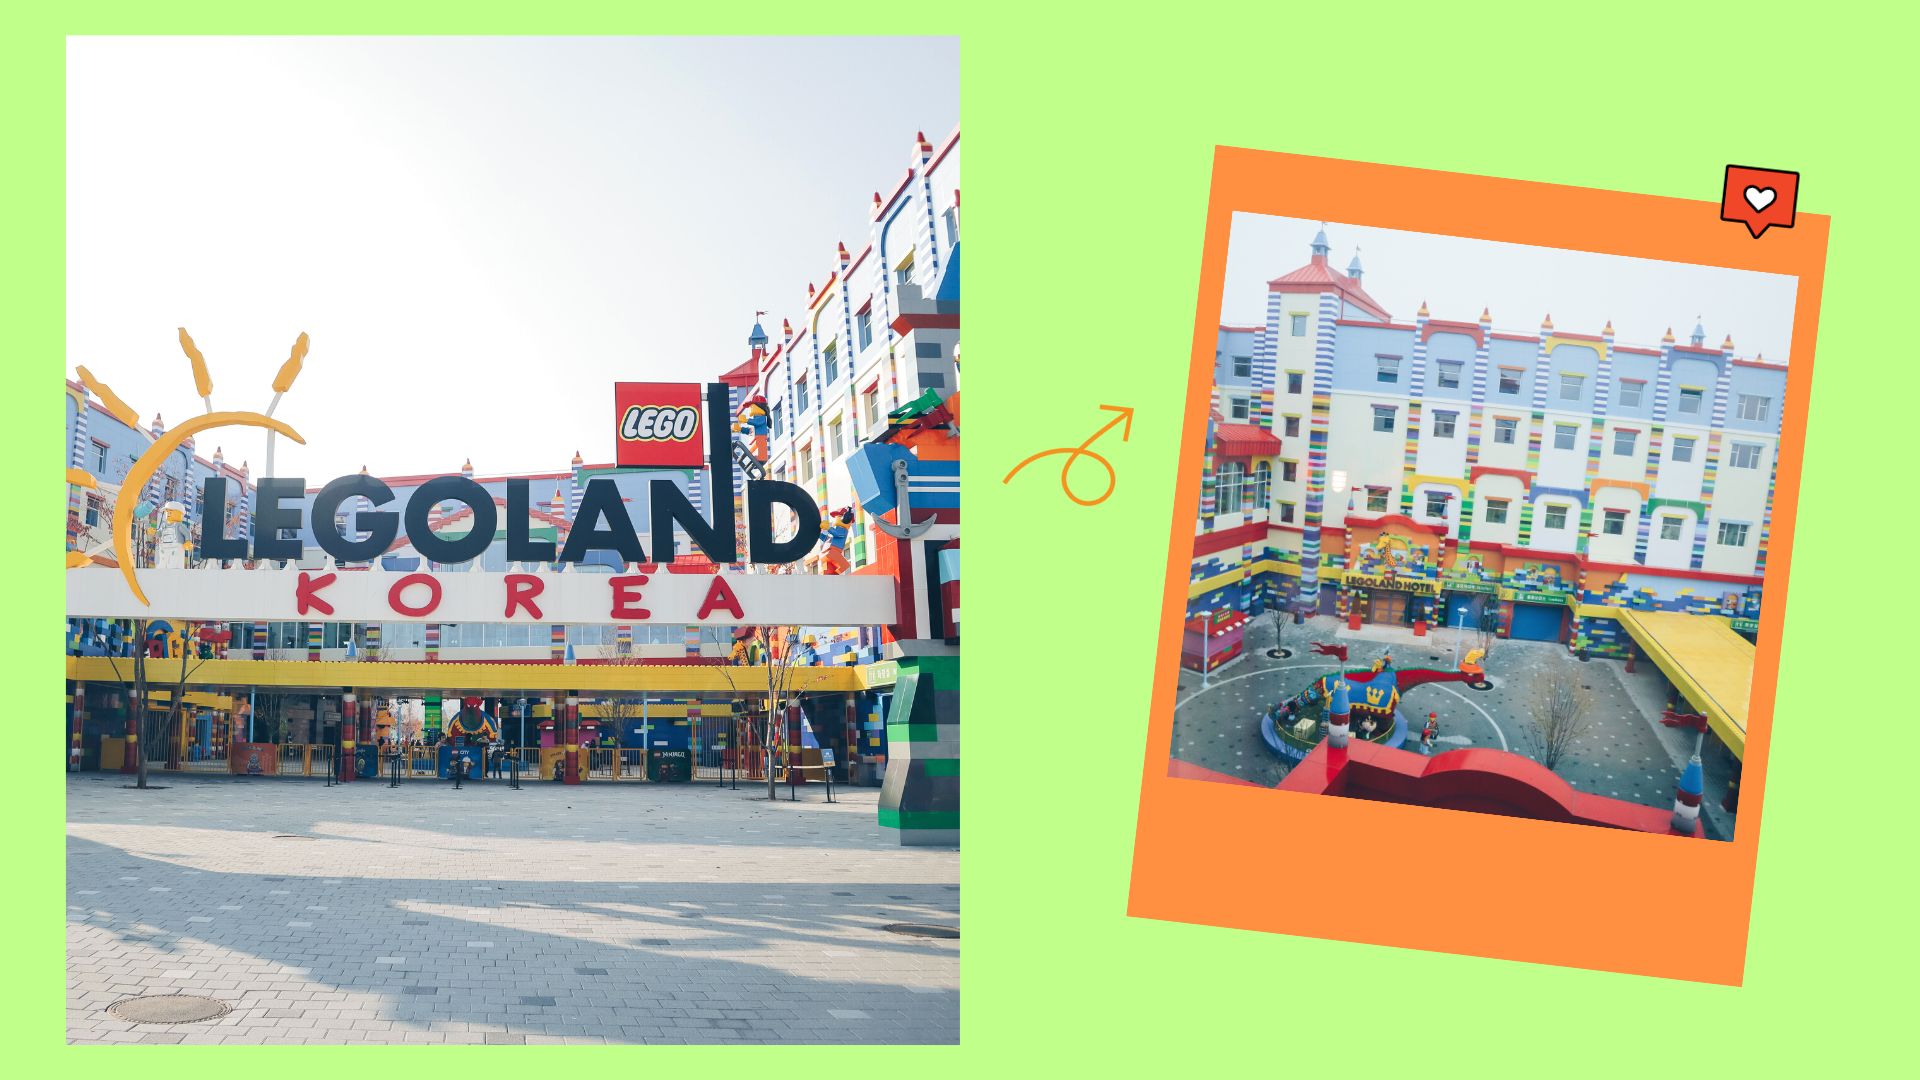 Legoland Korea Resort: Location, Things To Do